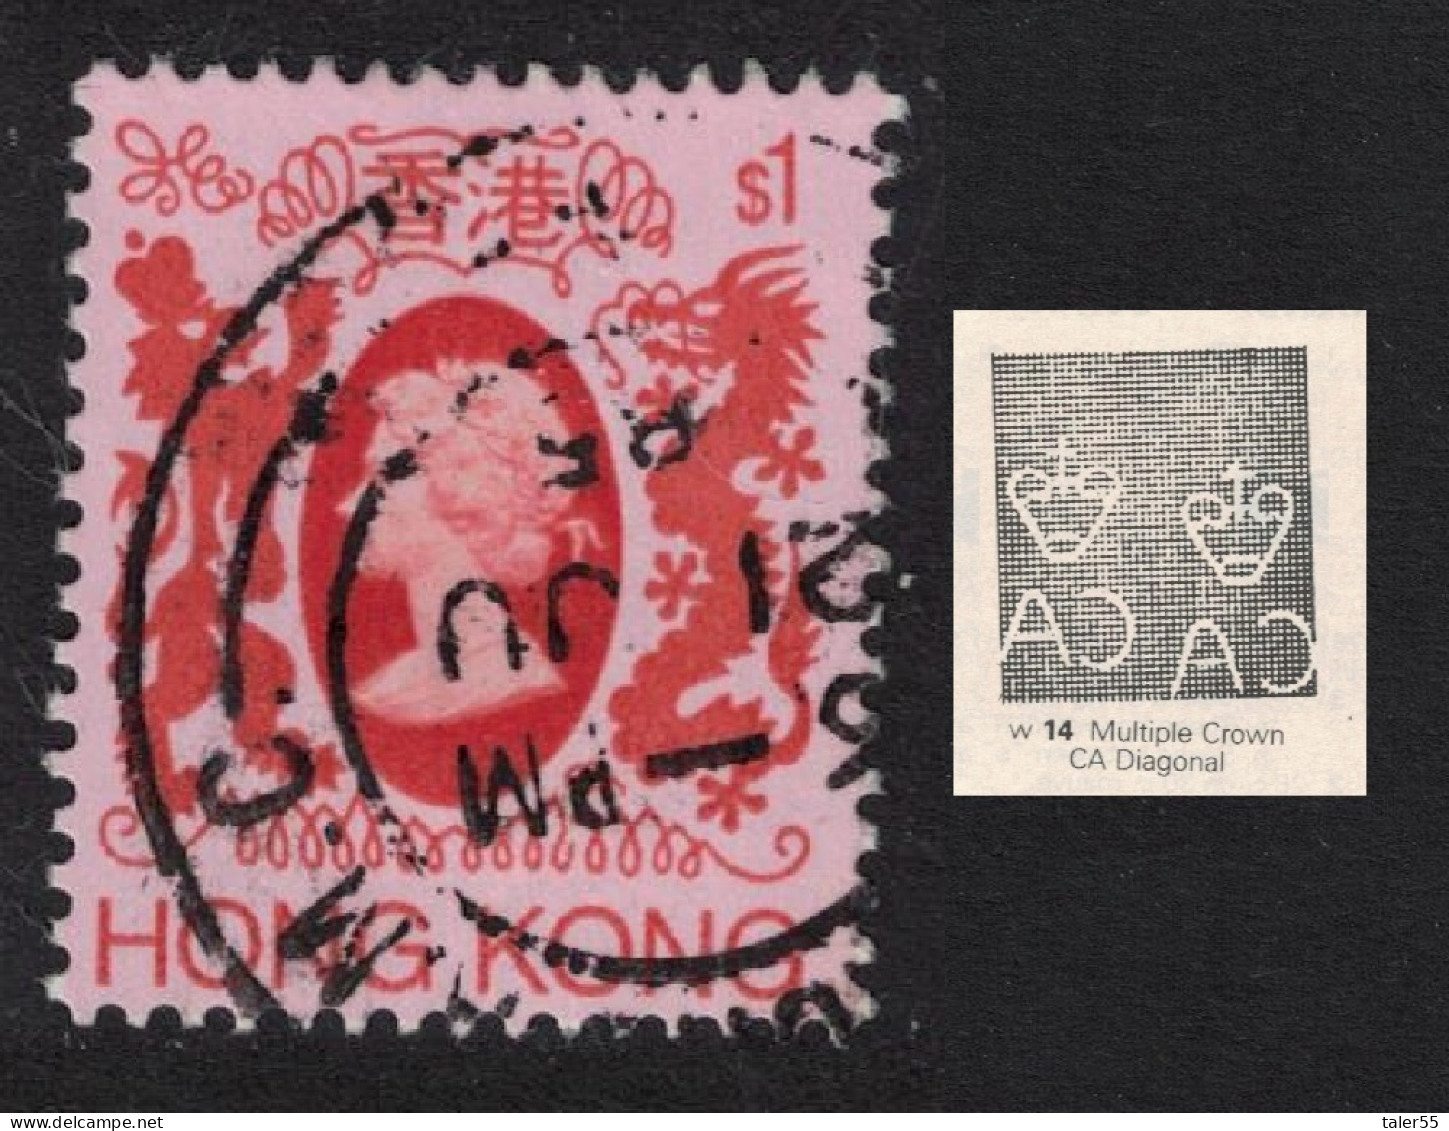 Hong Kong Queen Elizabeth II Definitive $1 1982 SG#424 - Used Stamps